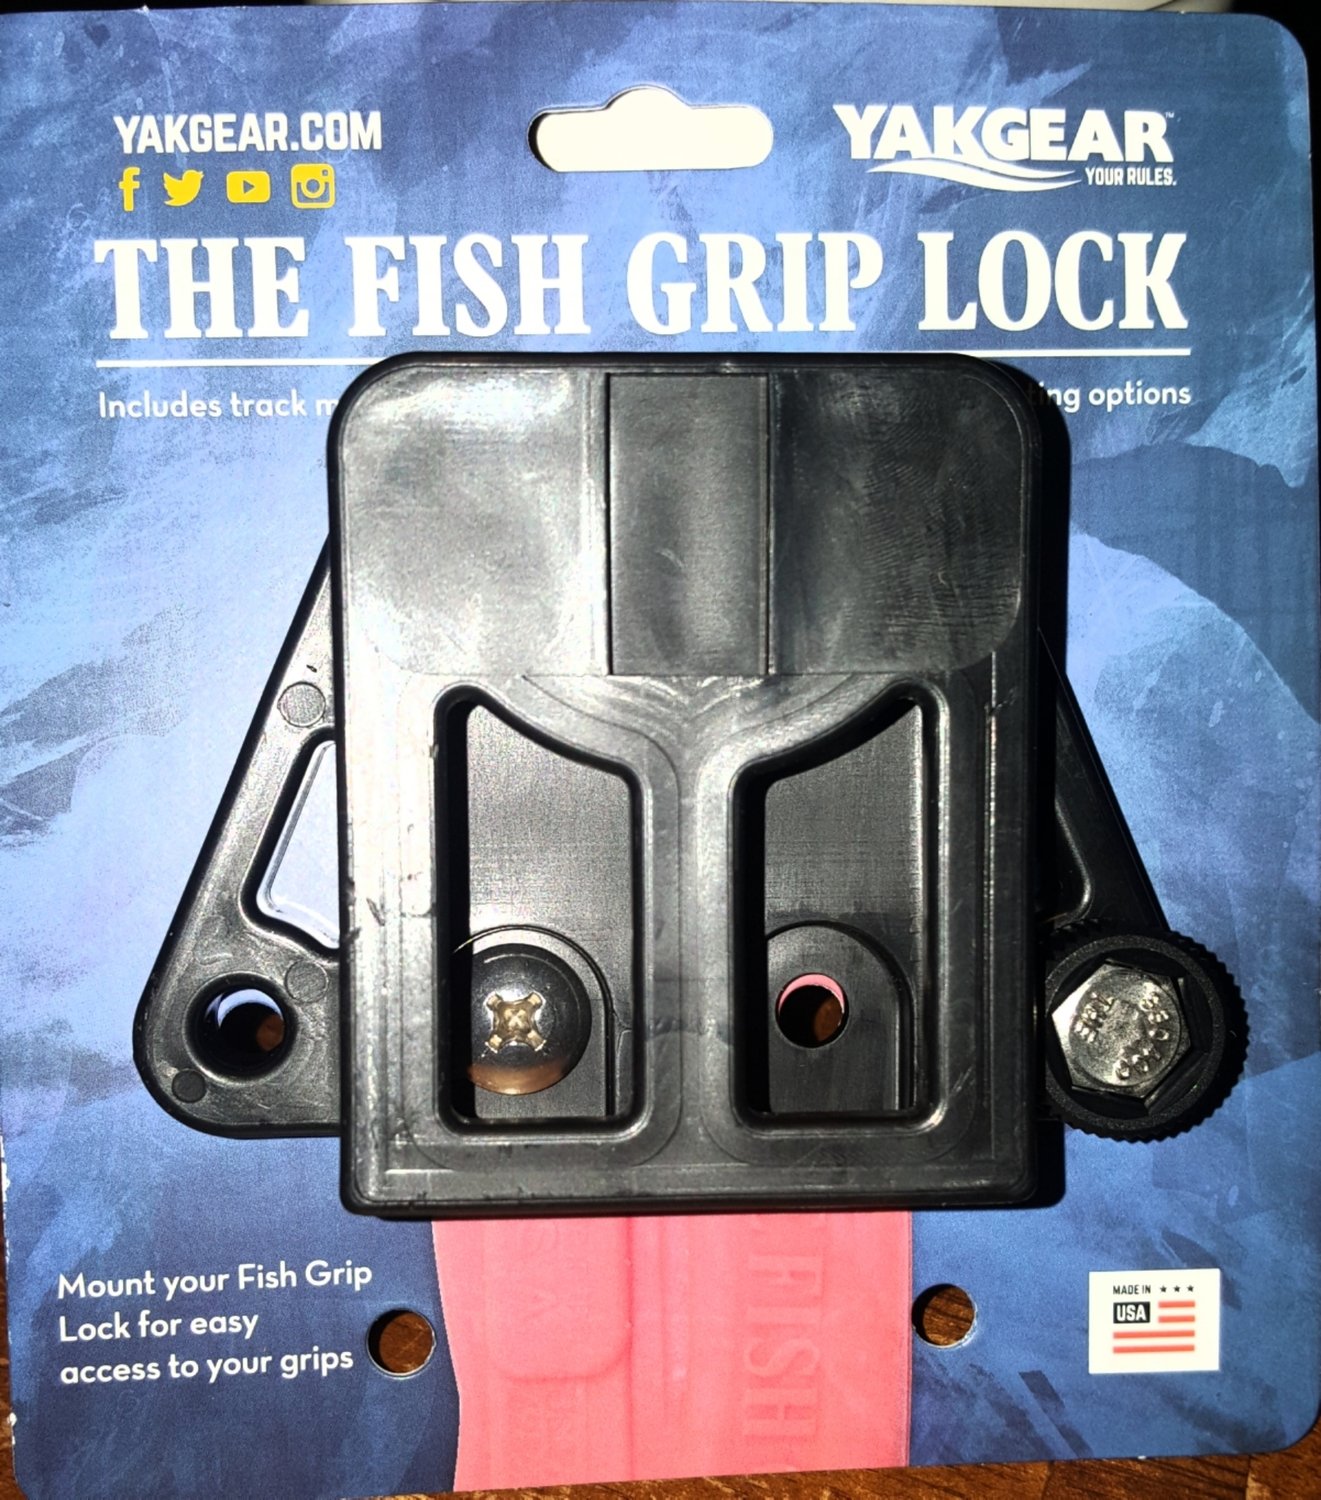 The Fish Grip Lock